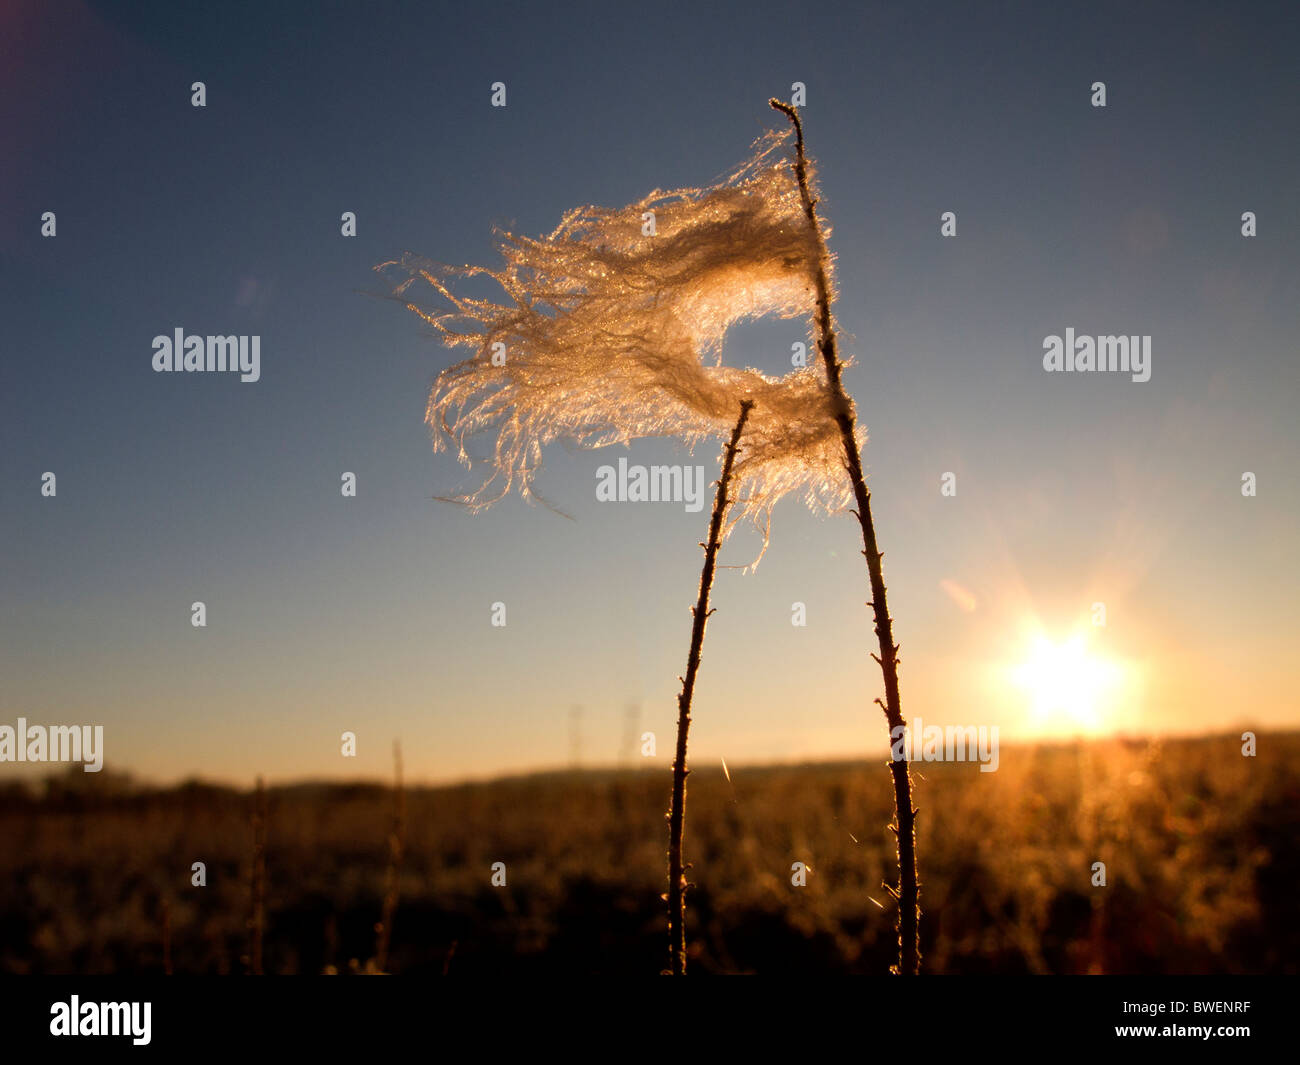 Windblown thistle in the rising sun. Stock Photo